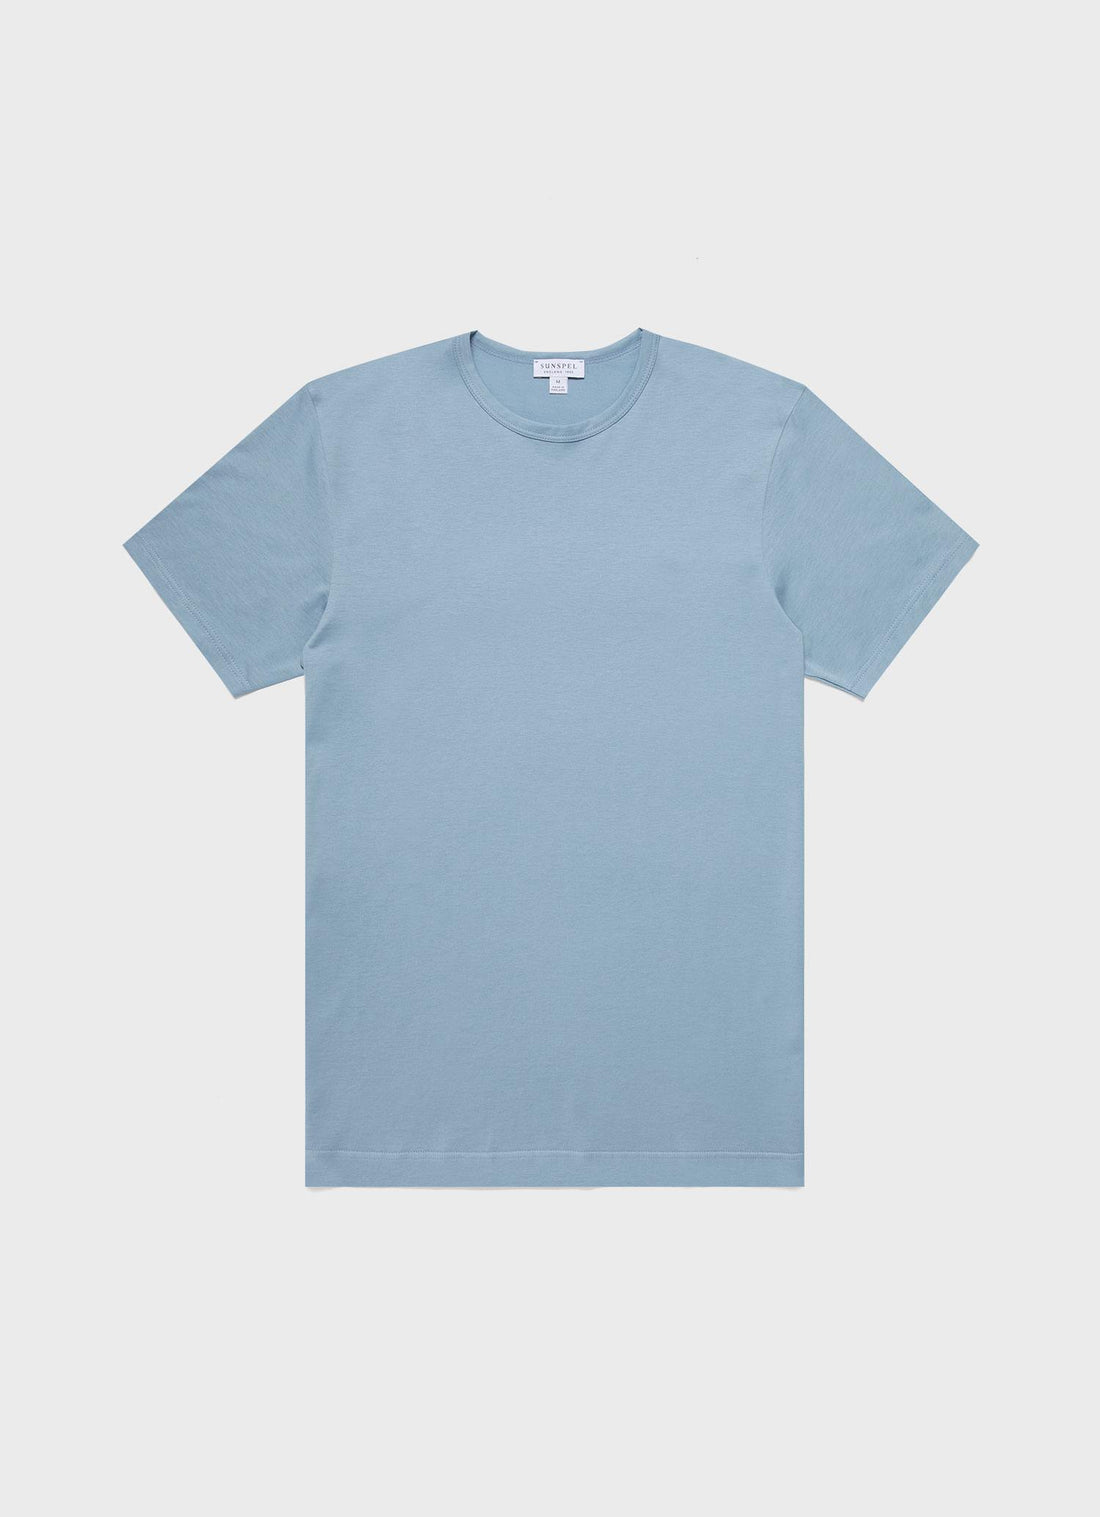 Men's Classic T-shirt in Blue Mist